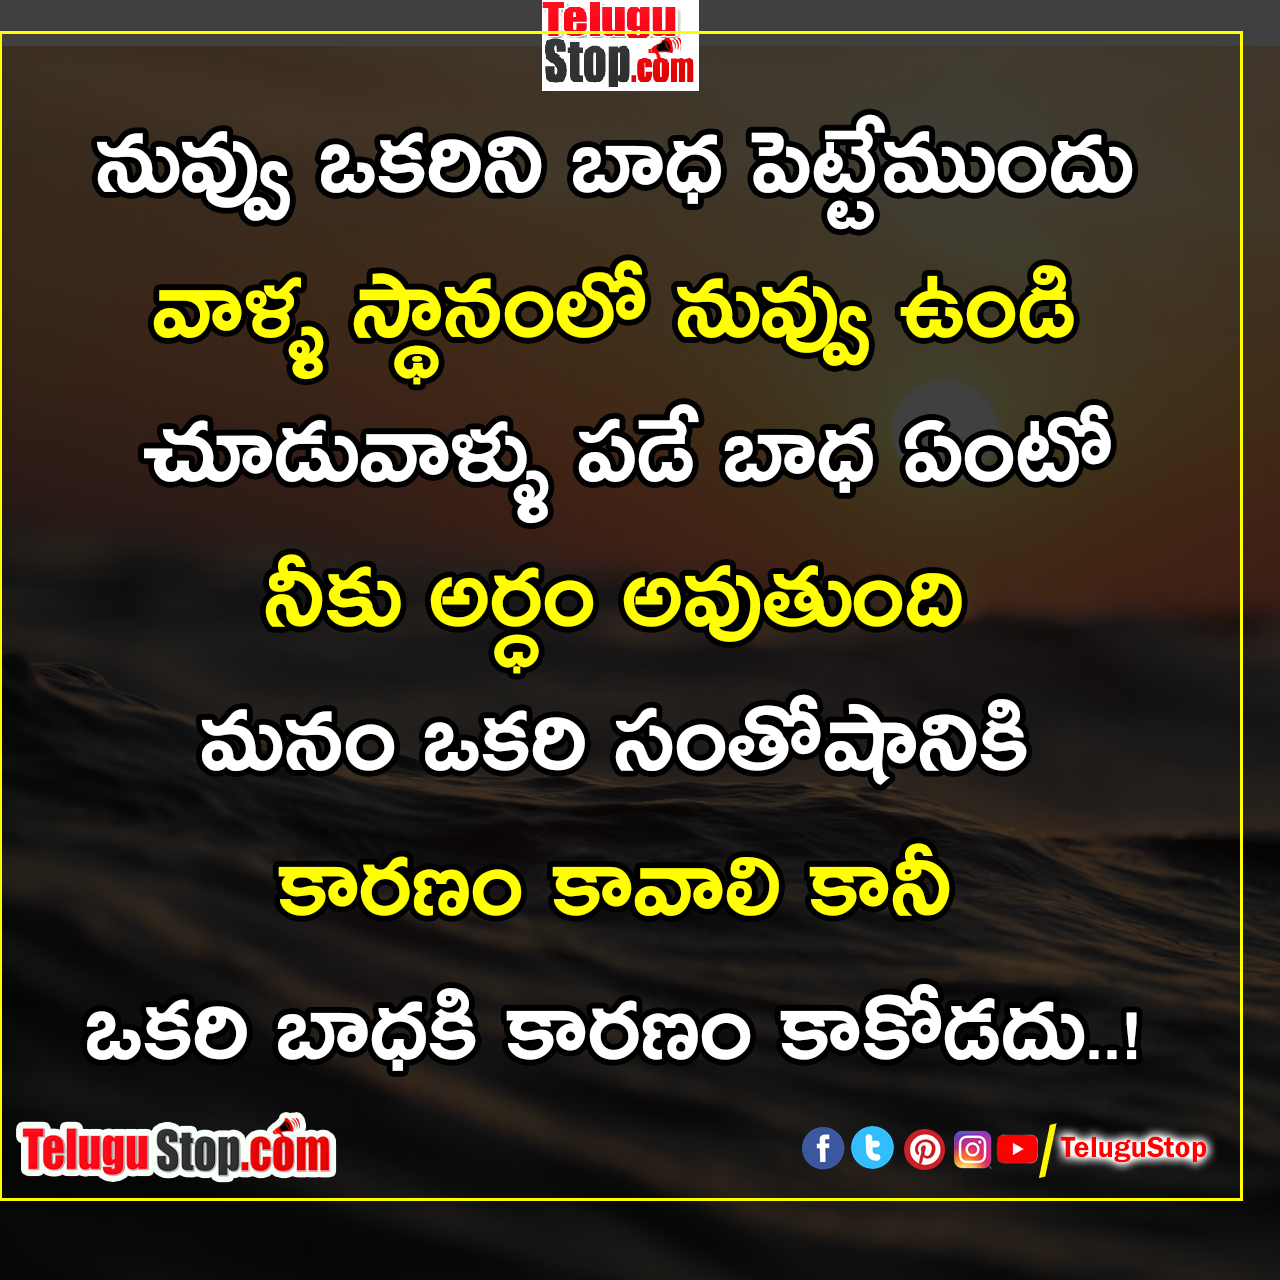 Quotestelugu, Dontupset-Telugu Daily Quotes - Inspirational/Motivational/Love/Friendship/Good Morning Quote